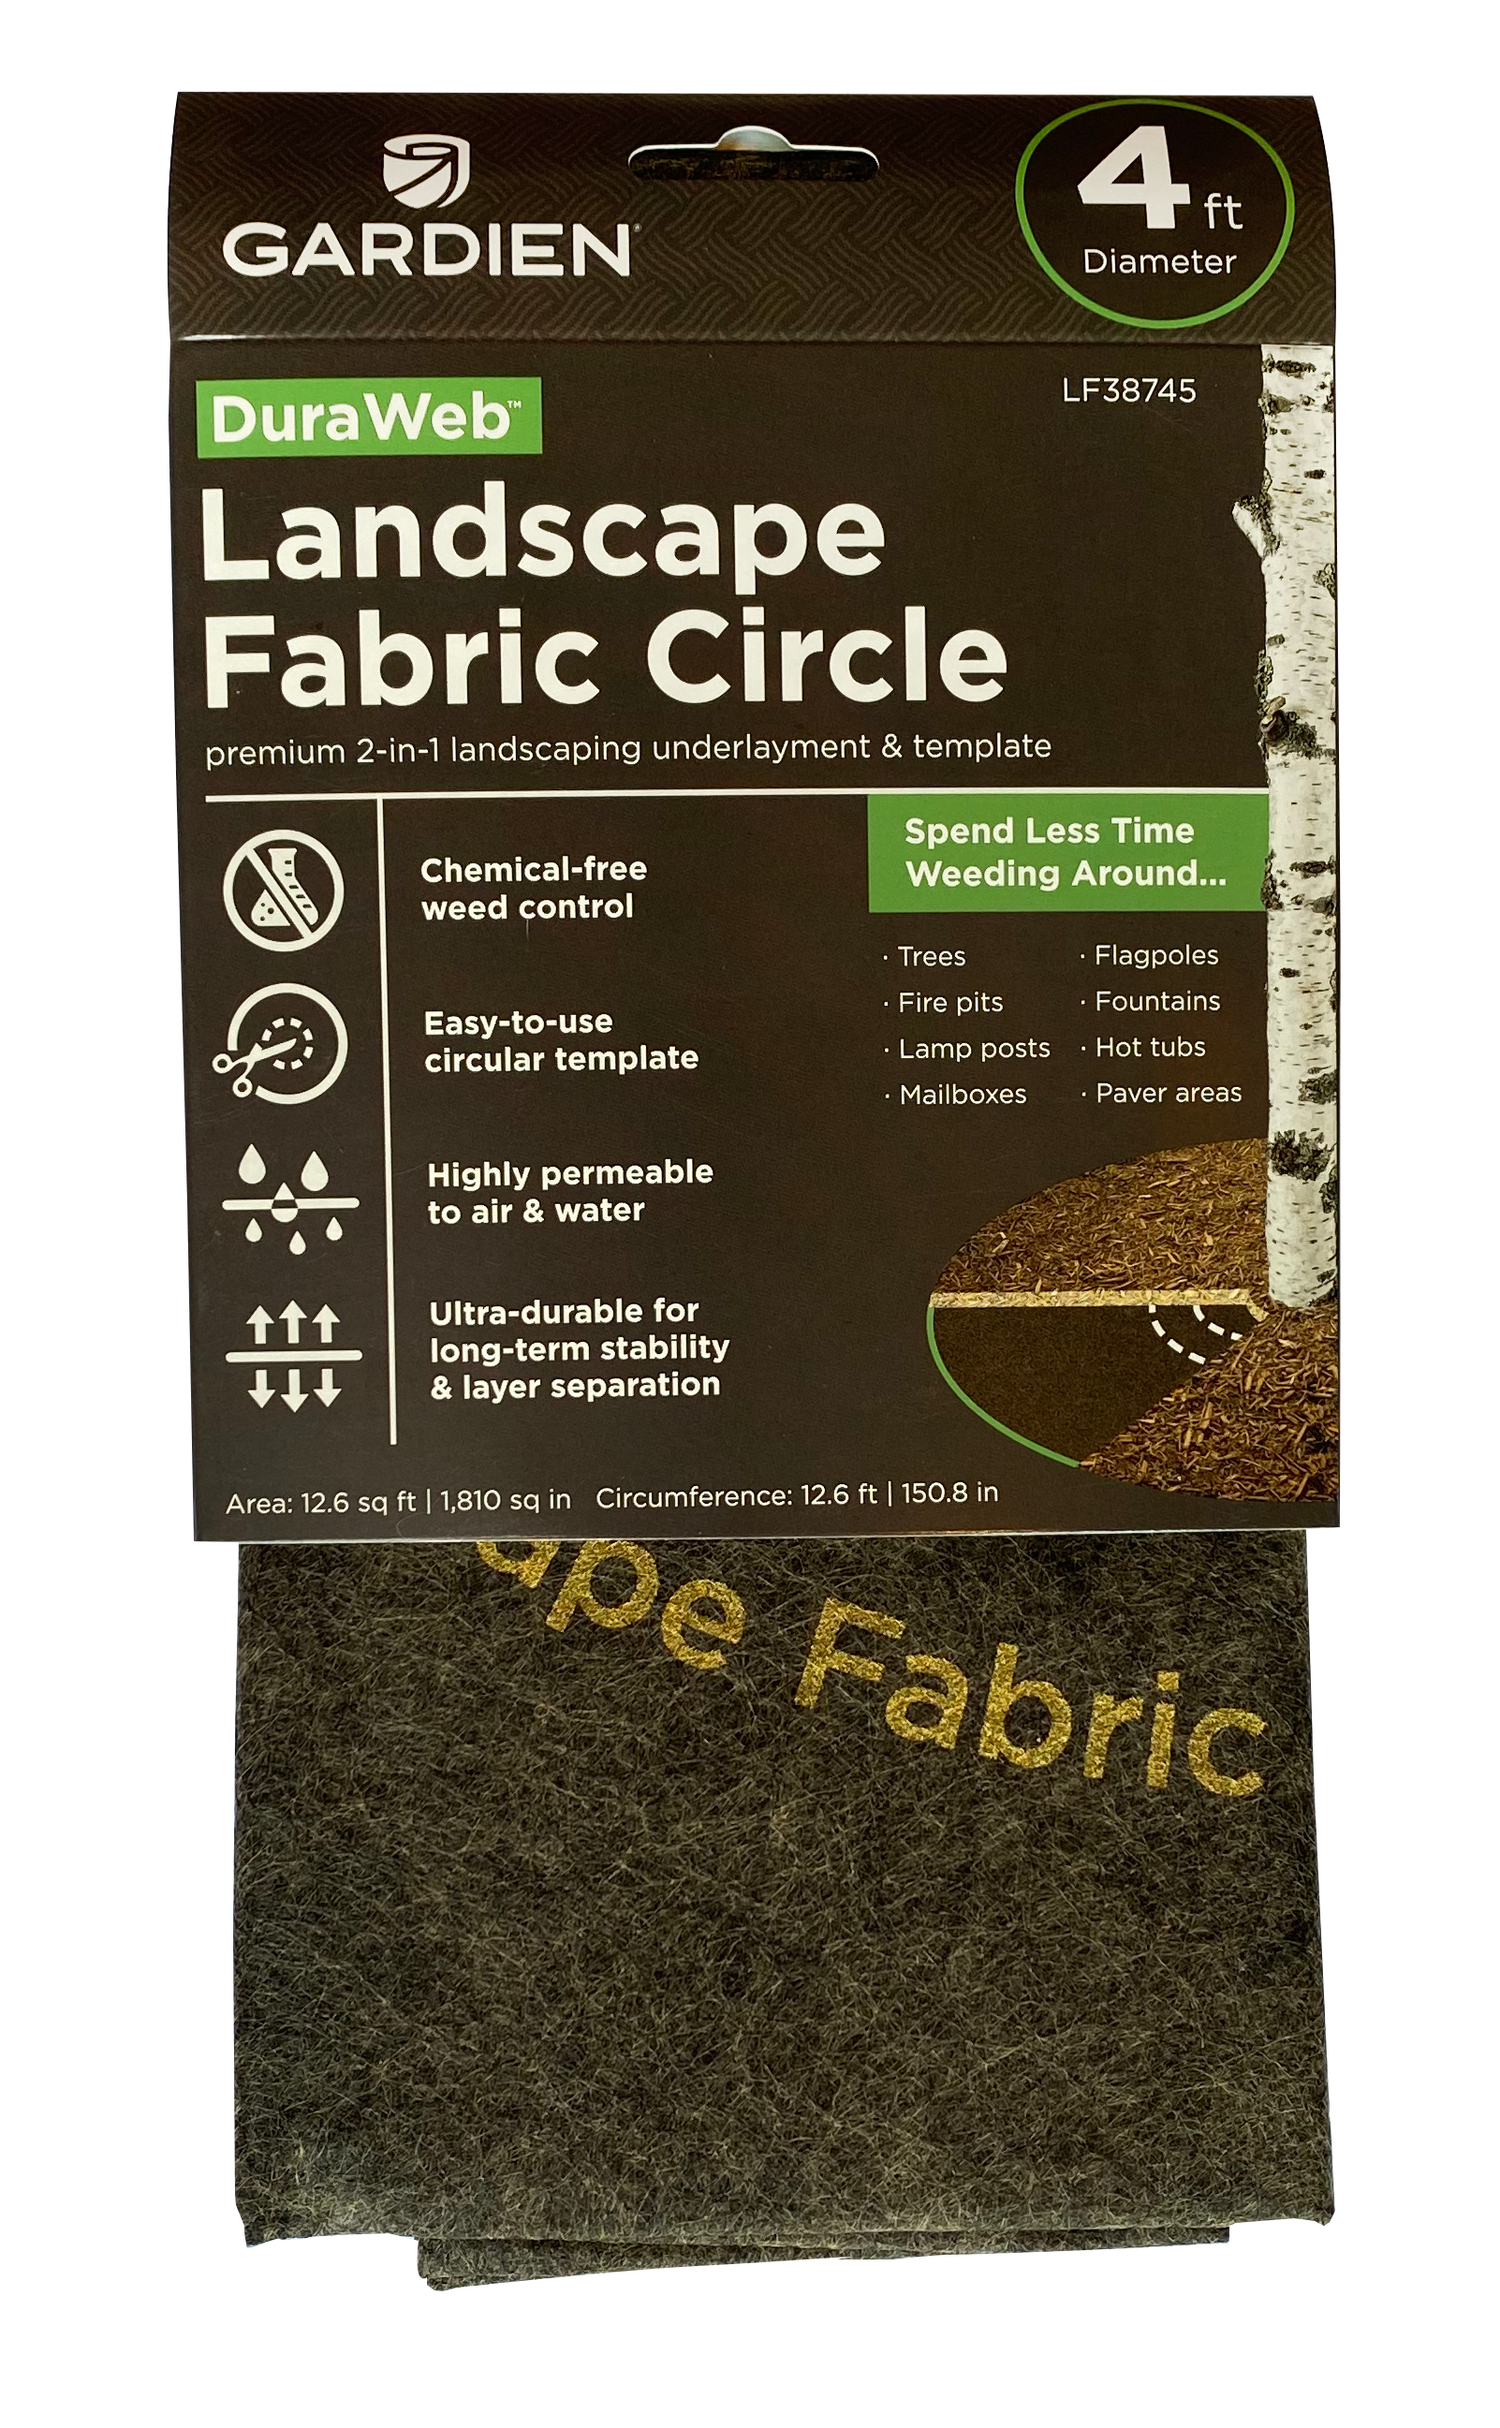 DuraWeb Fabric Circle in packaging